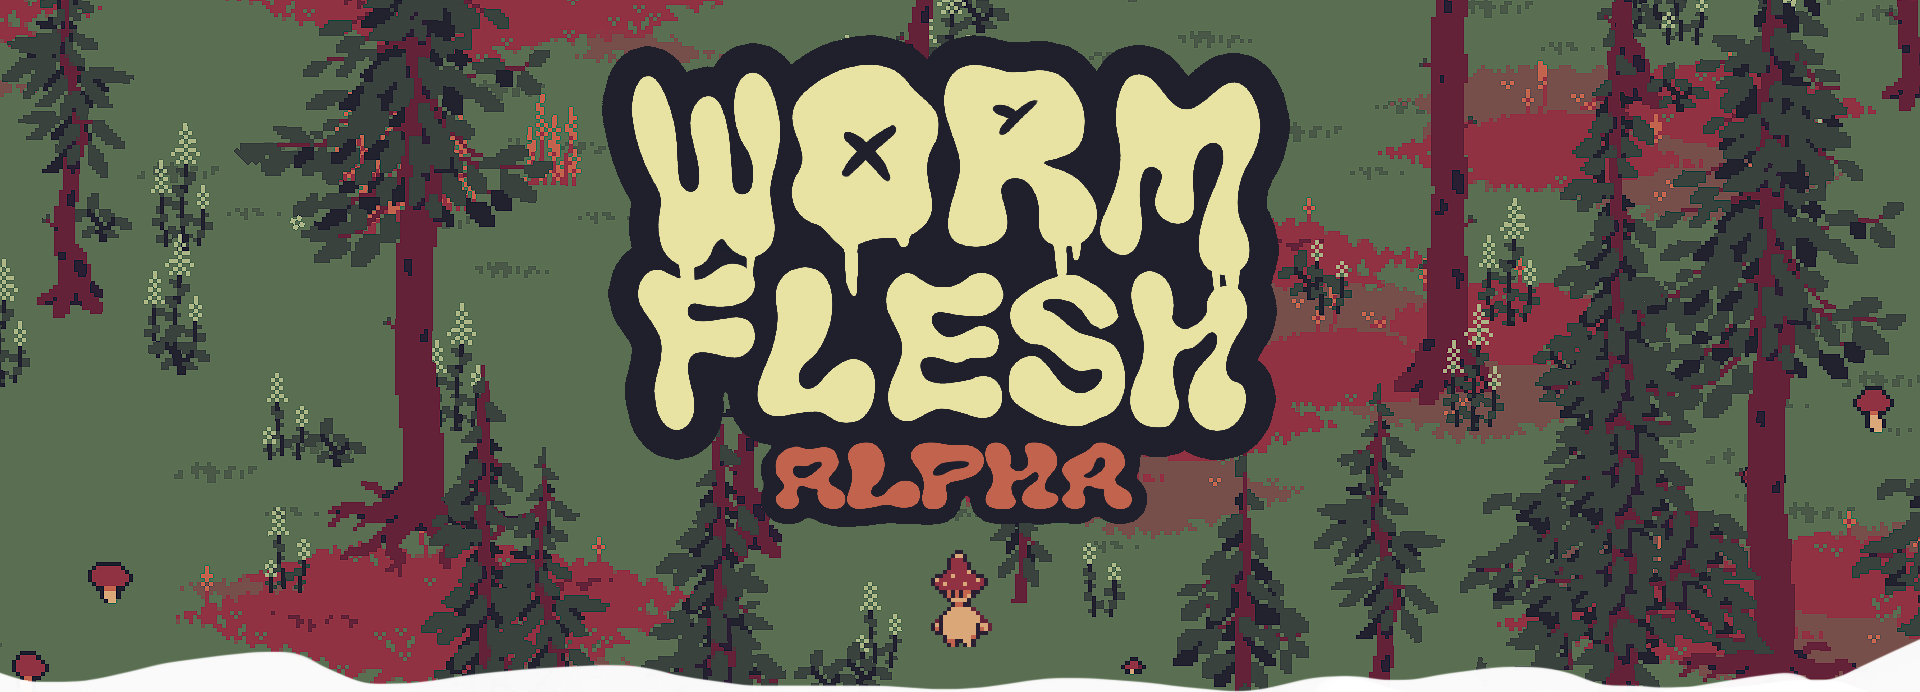 Worm Flesh (rip)